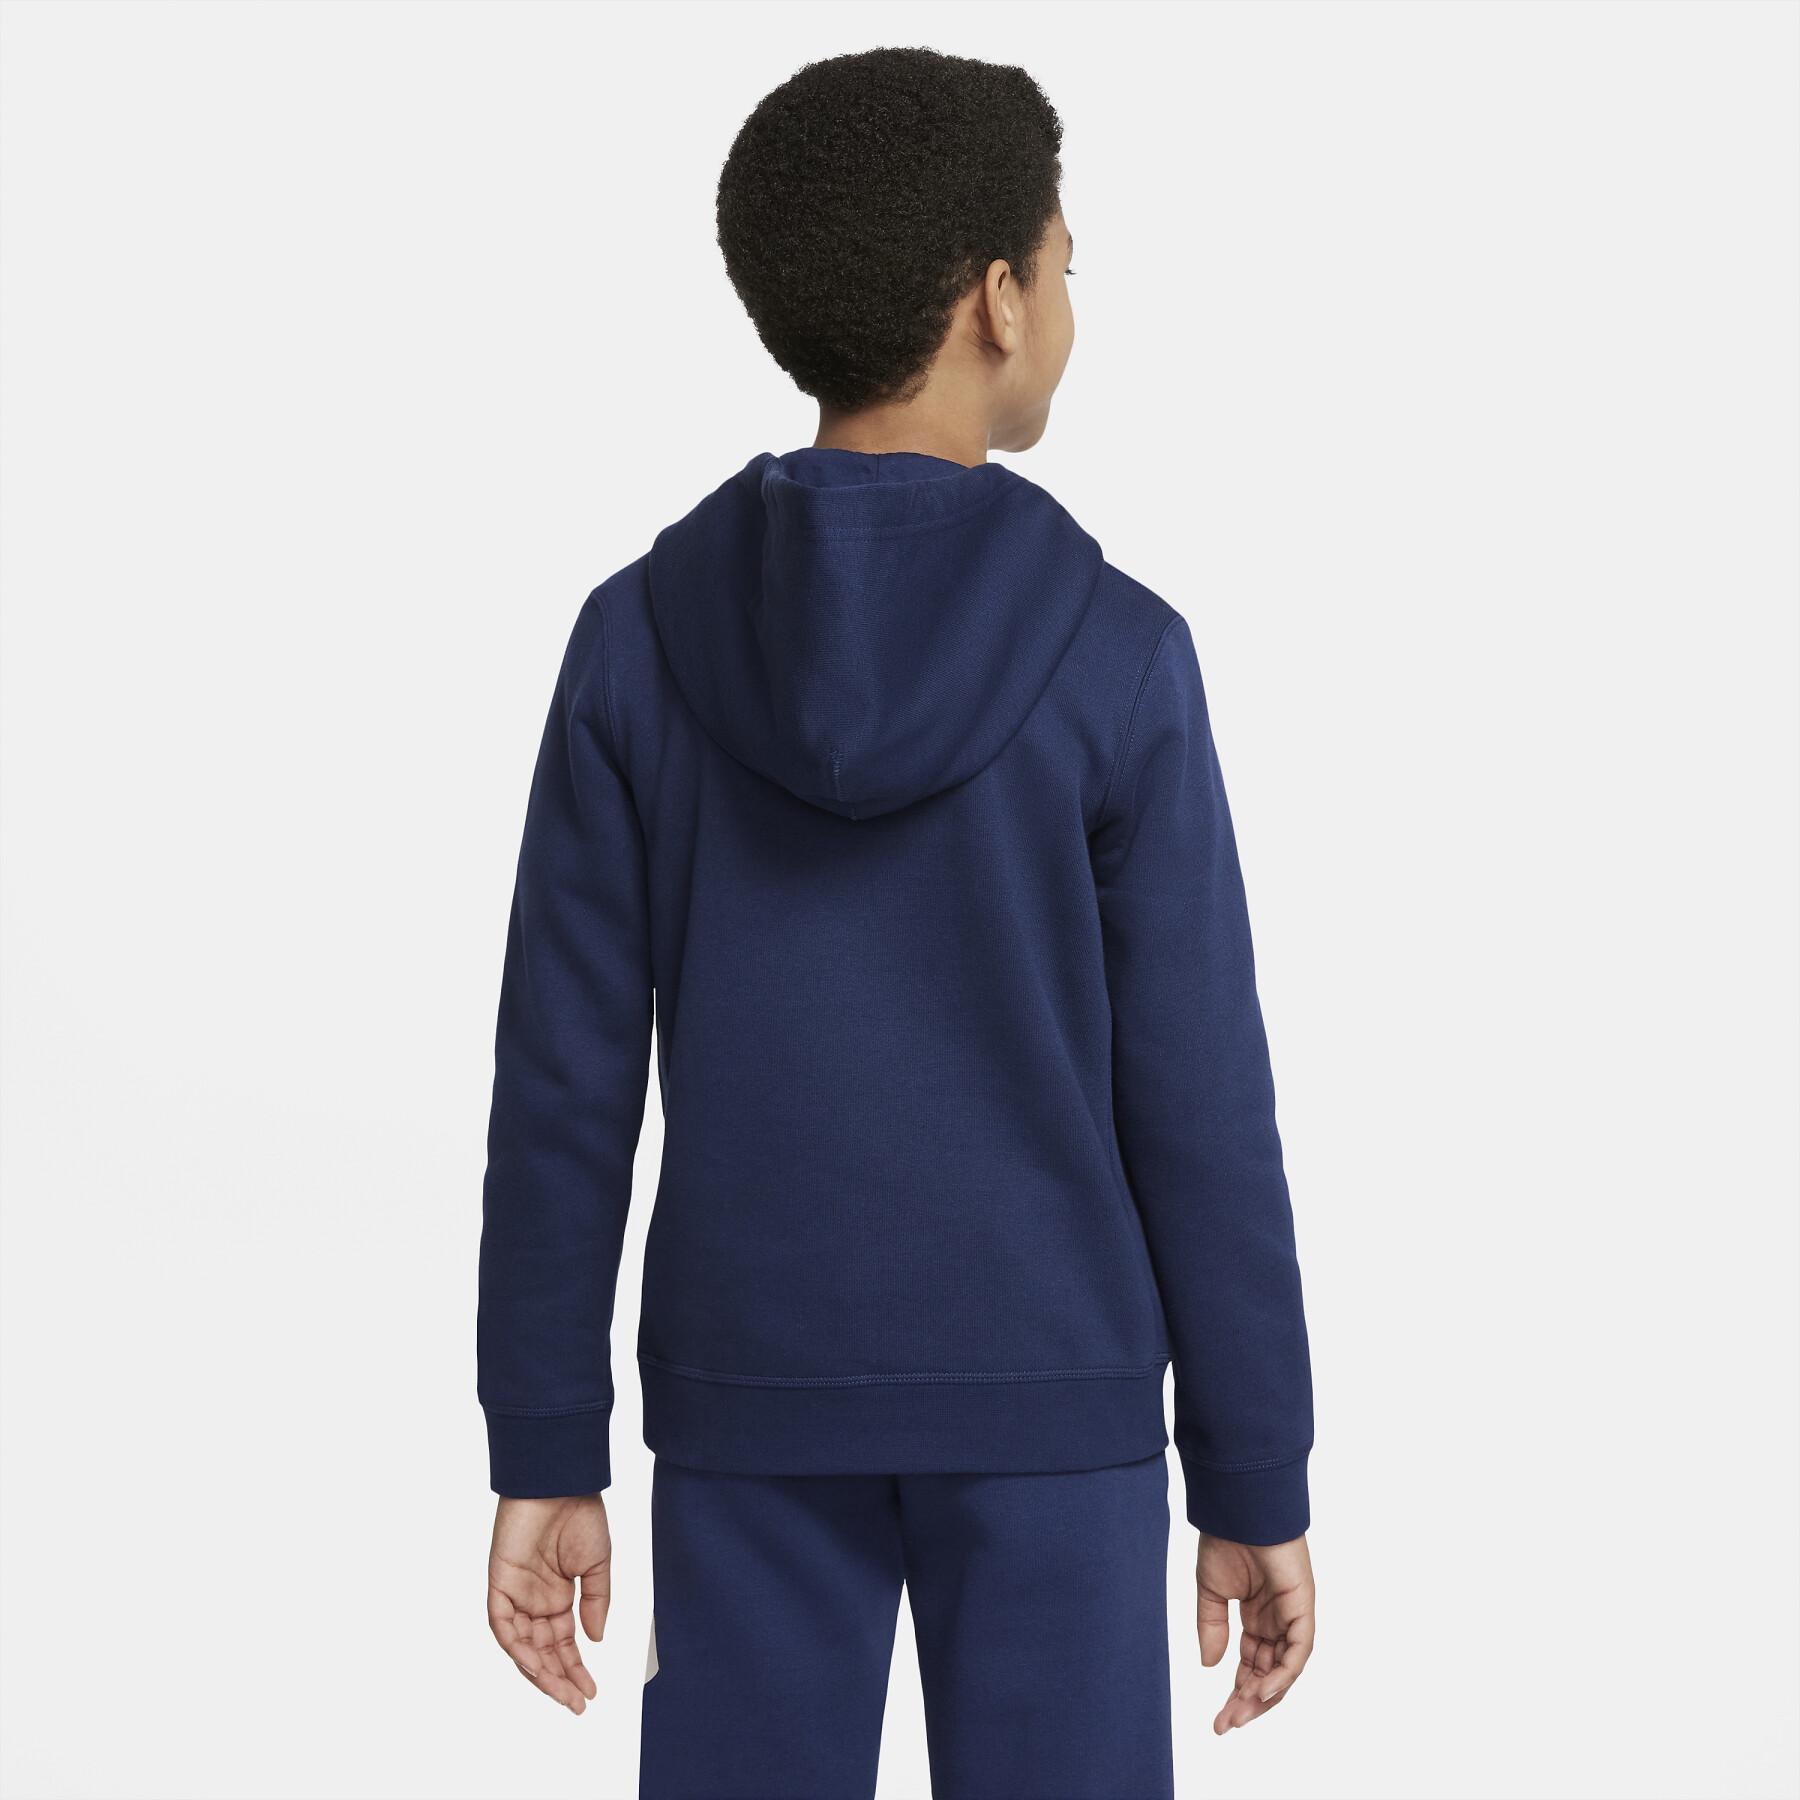 Sweatshirt enfant Nike Core